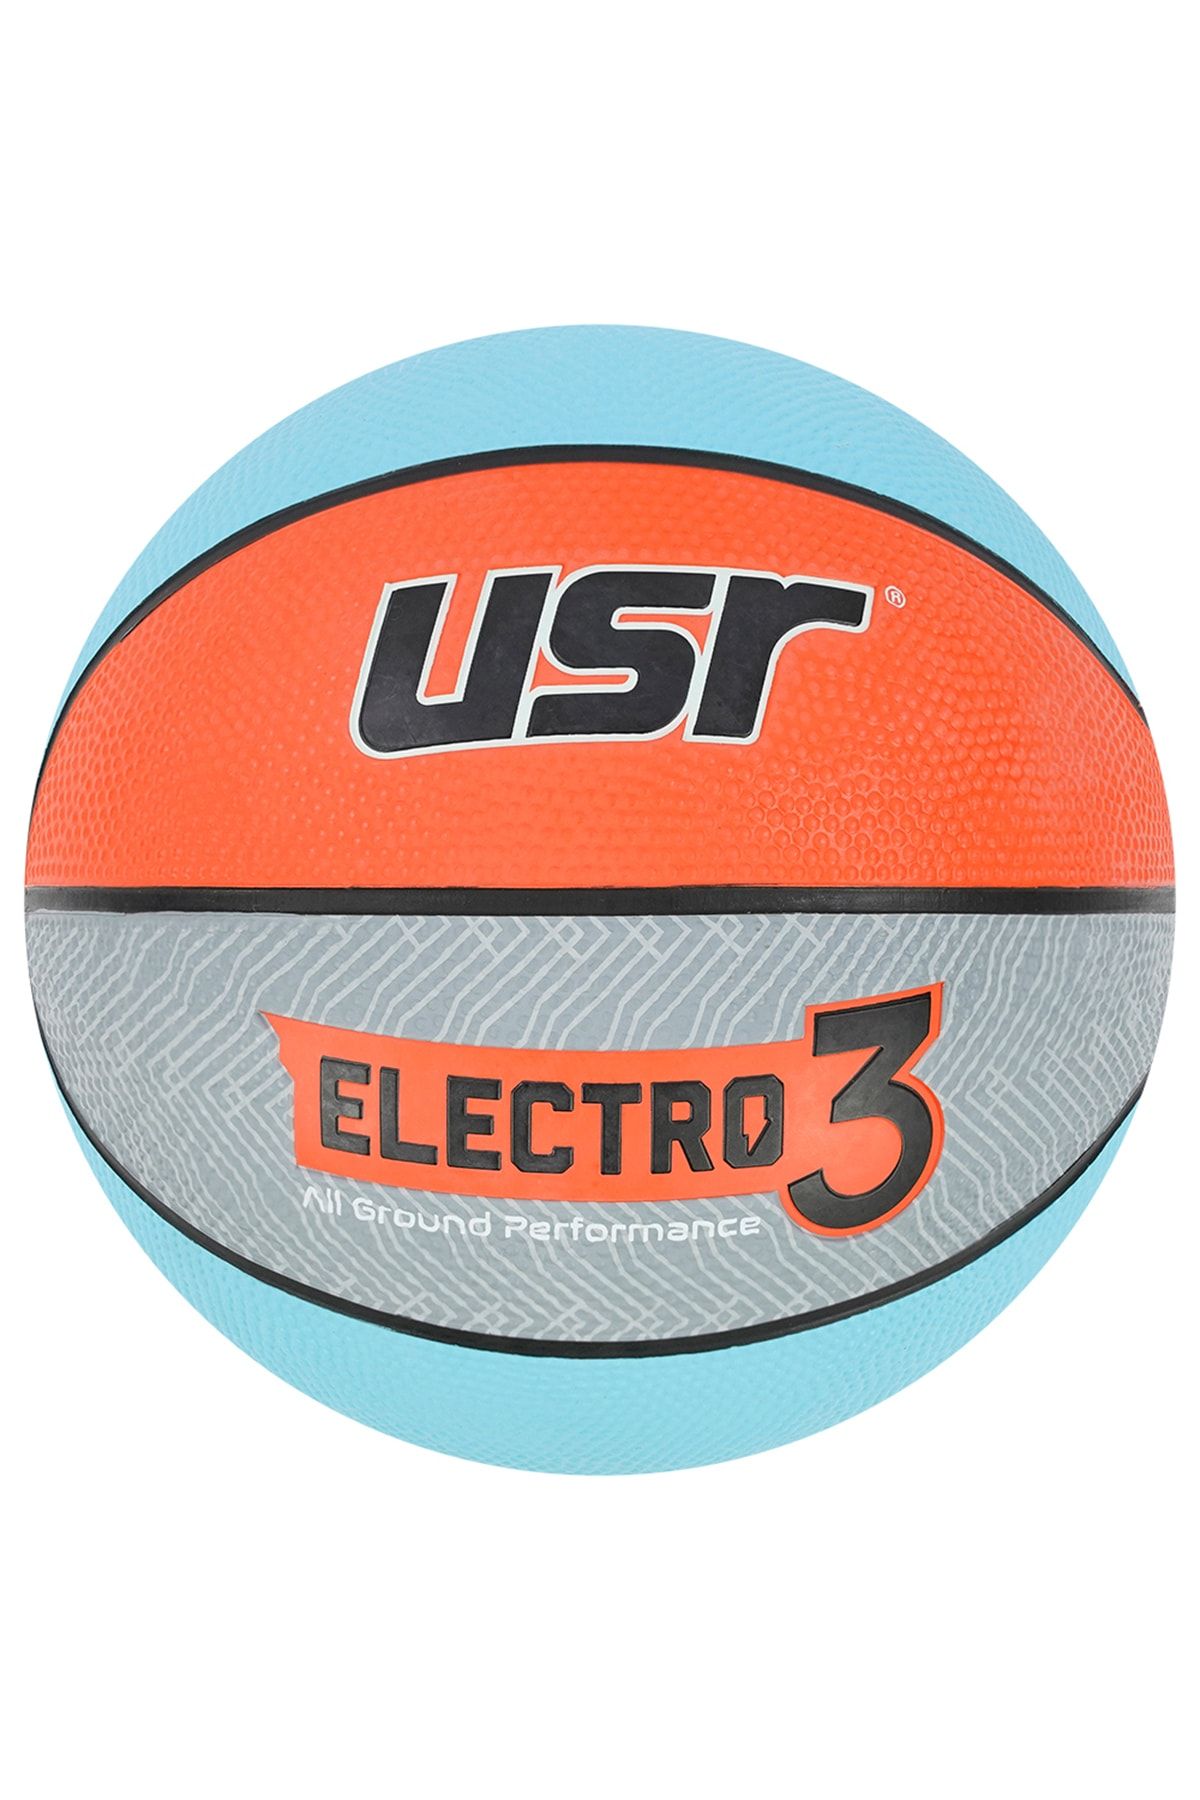 Usr Electro3 3 No Mini Basketbol Topu